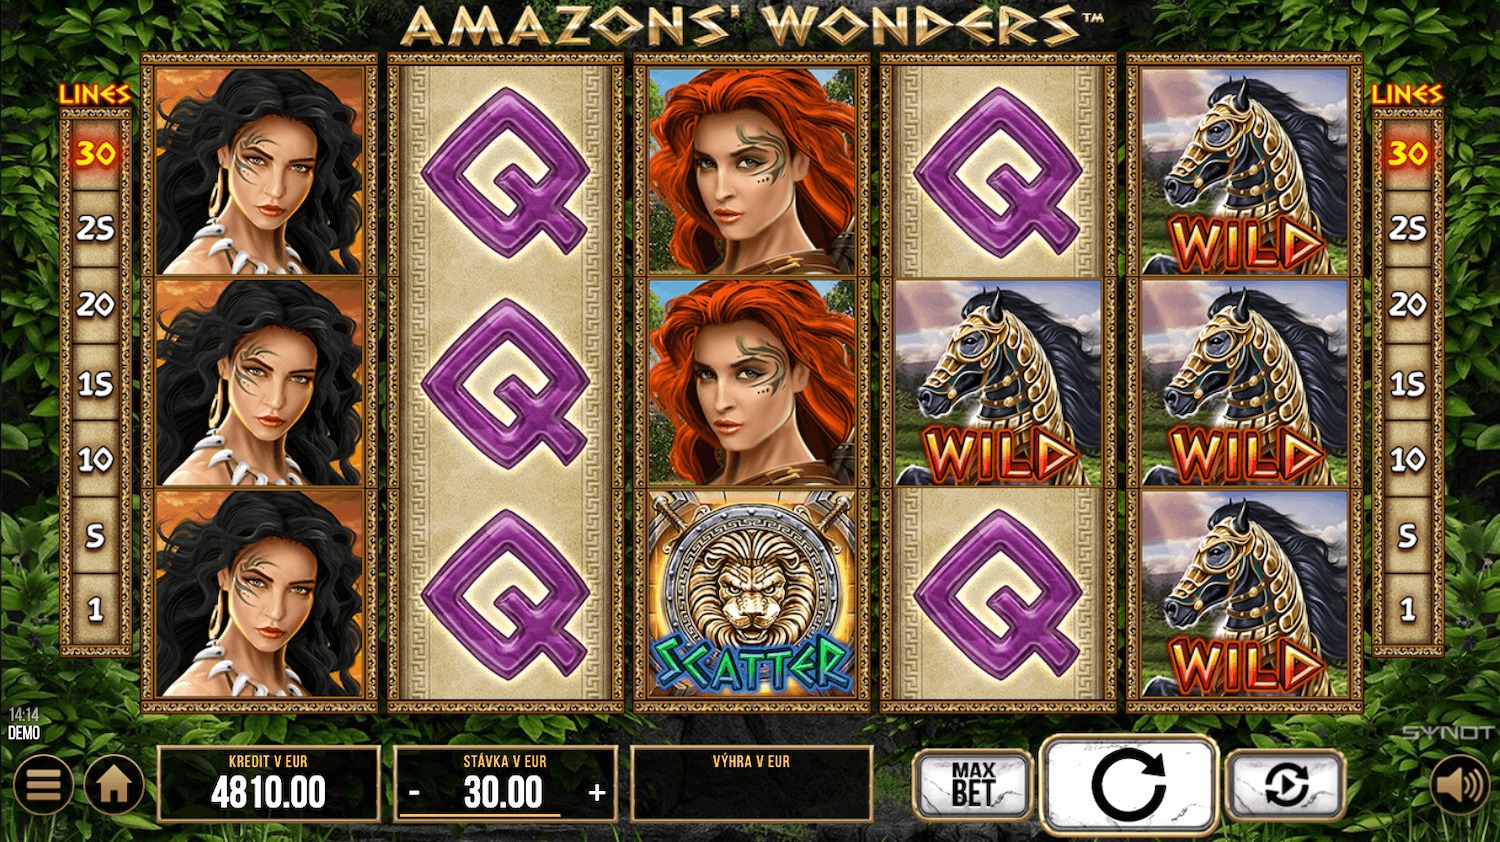 Amazon's Wonders - ukážka automatu a valcov